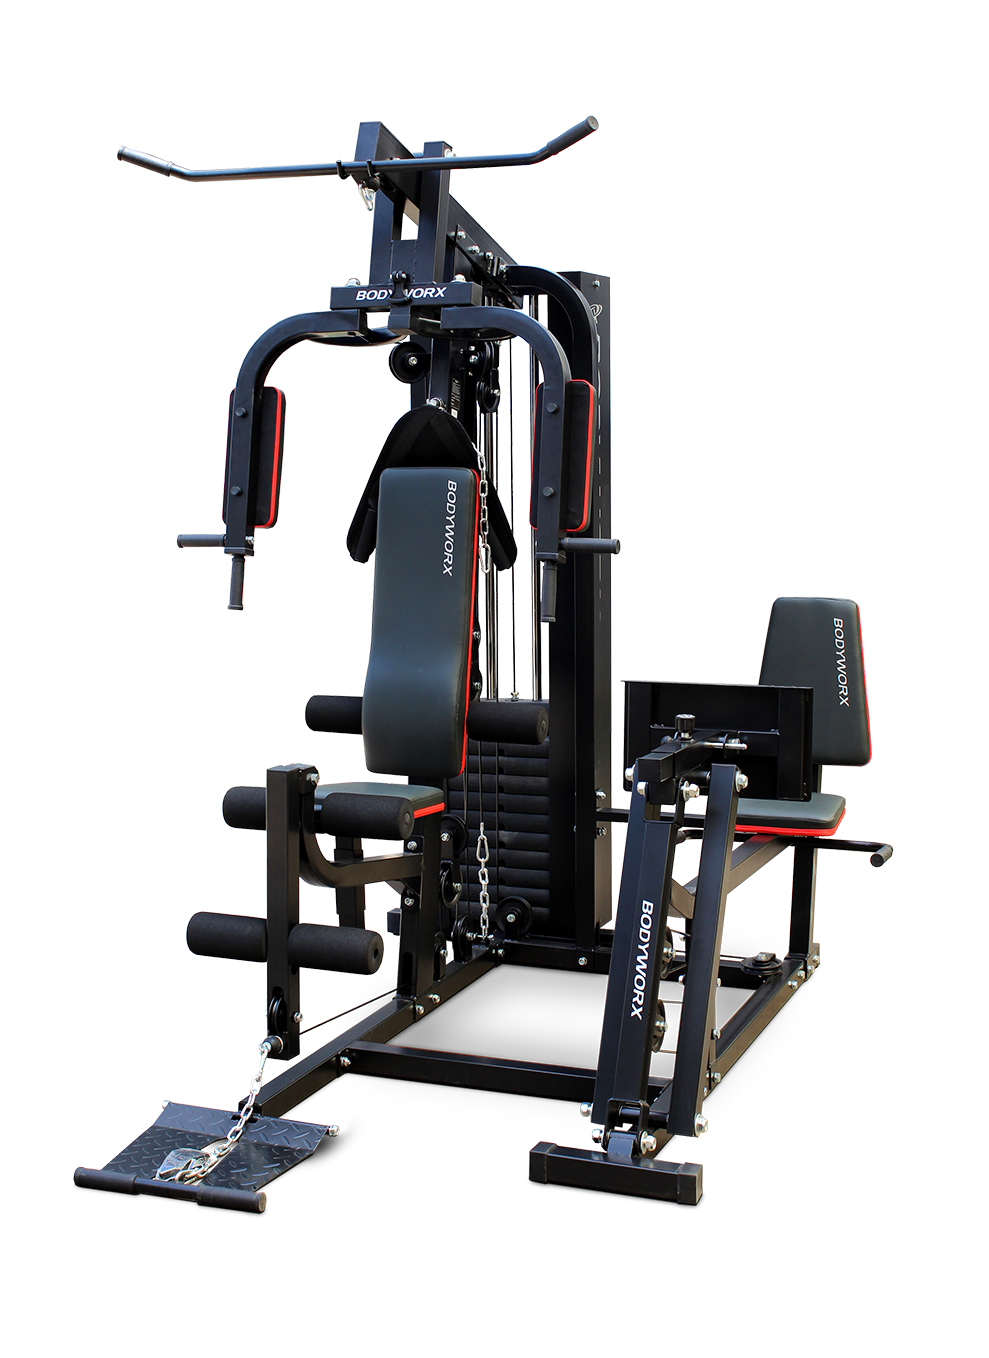 SALE:  Bodyworx DELUXE-900  Home Gym with Leg Press